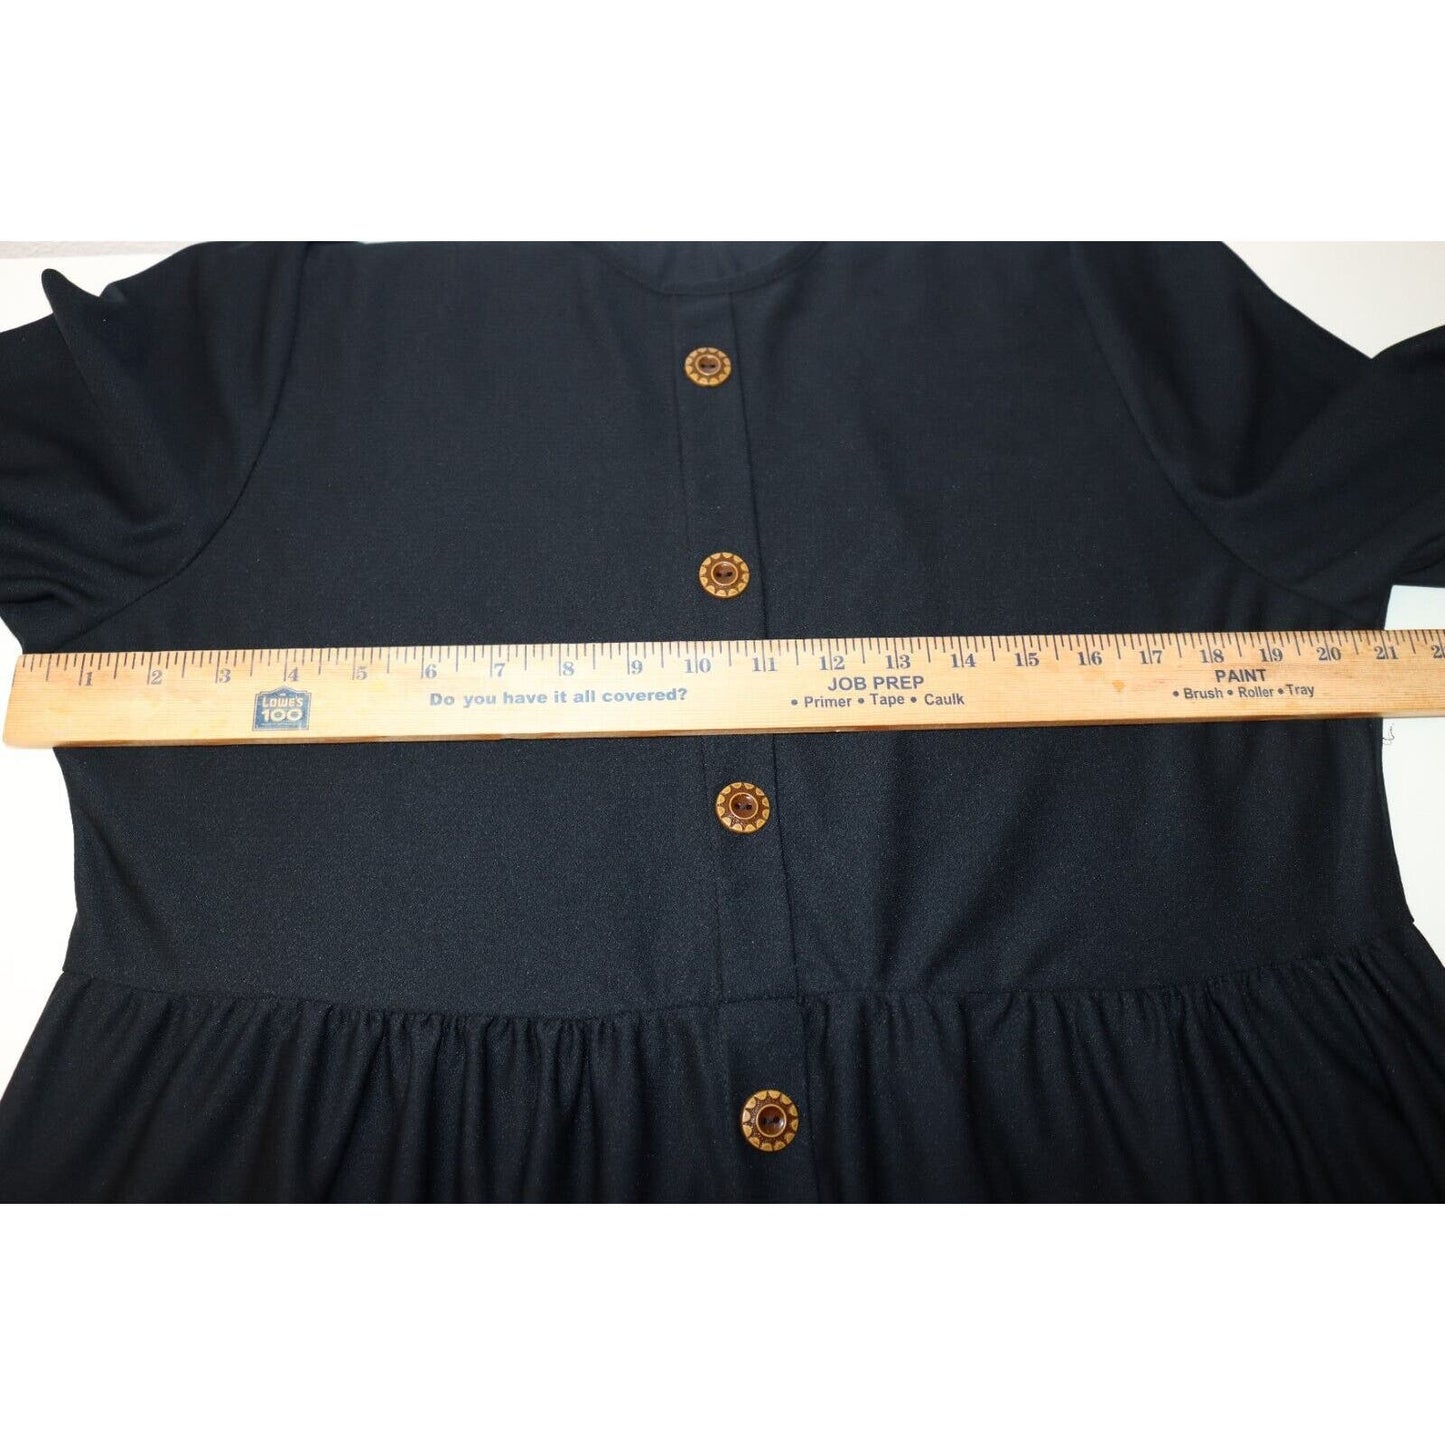 ECESUN Maxi Dress Black Abaya Long Sleeve (60)